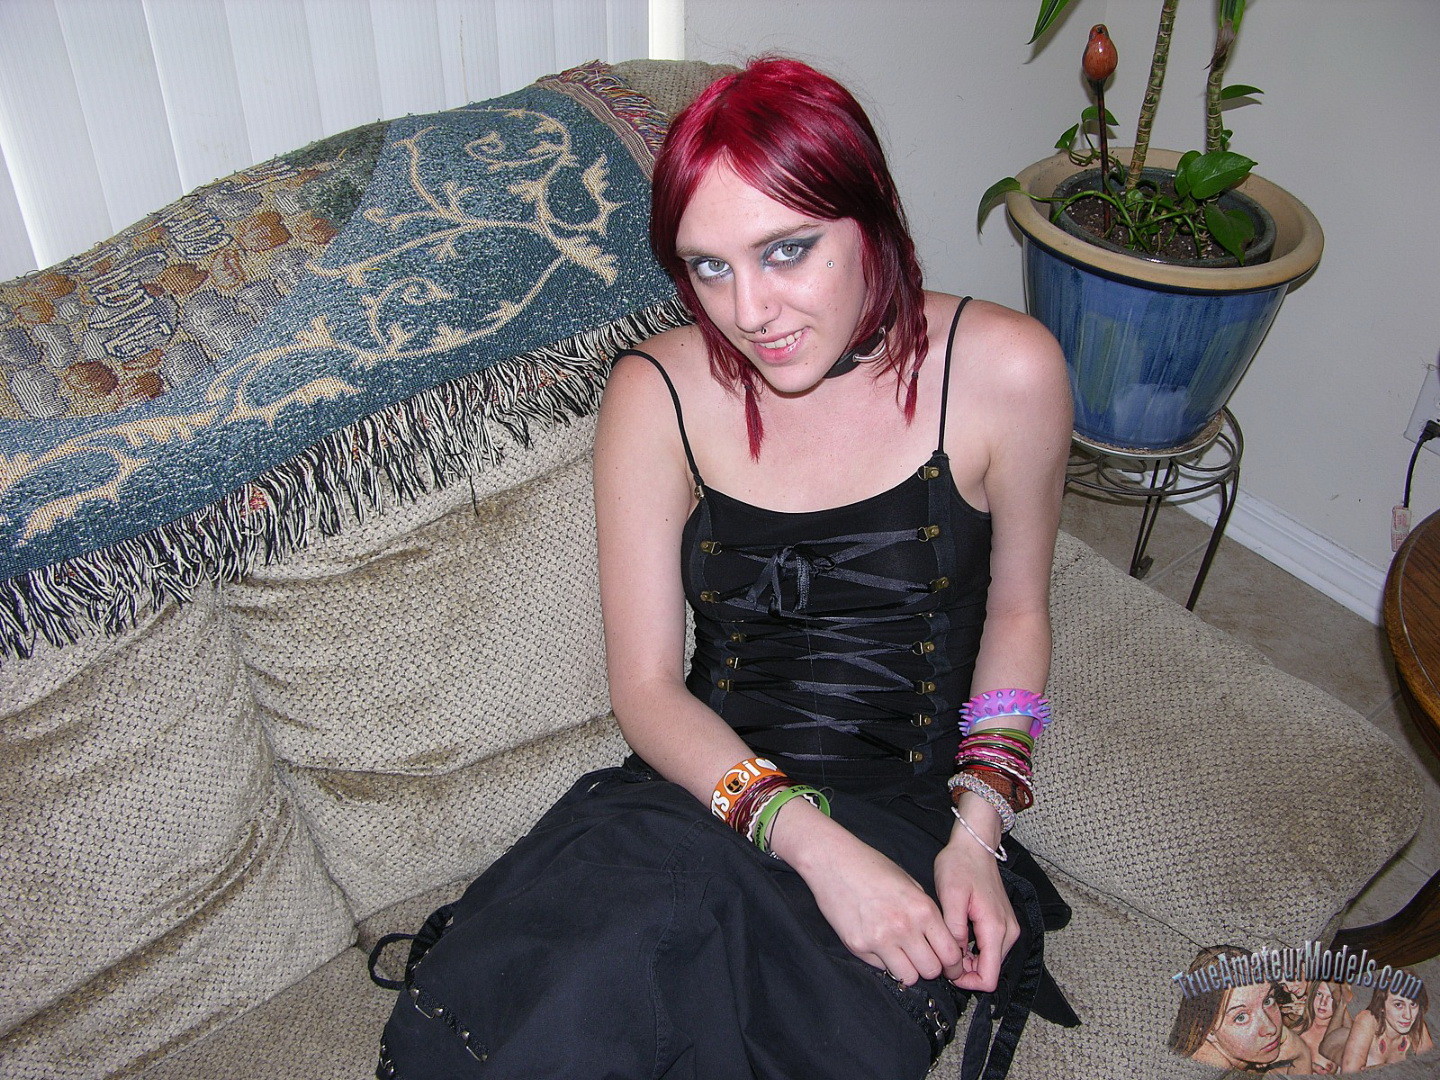 Metalhead girl modèle nu et étalage de cul punk rock
 #67299716